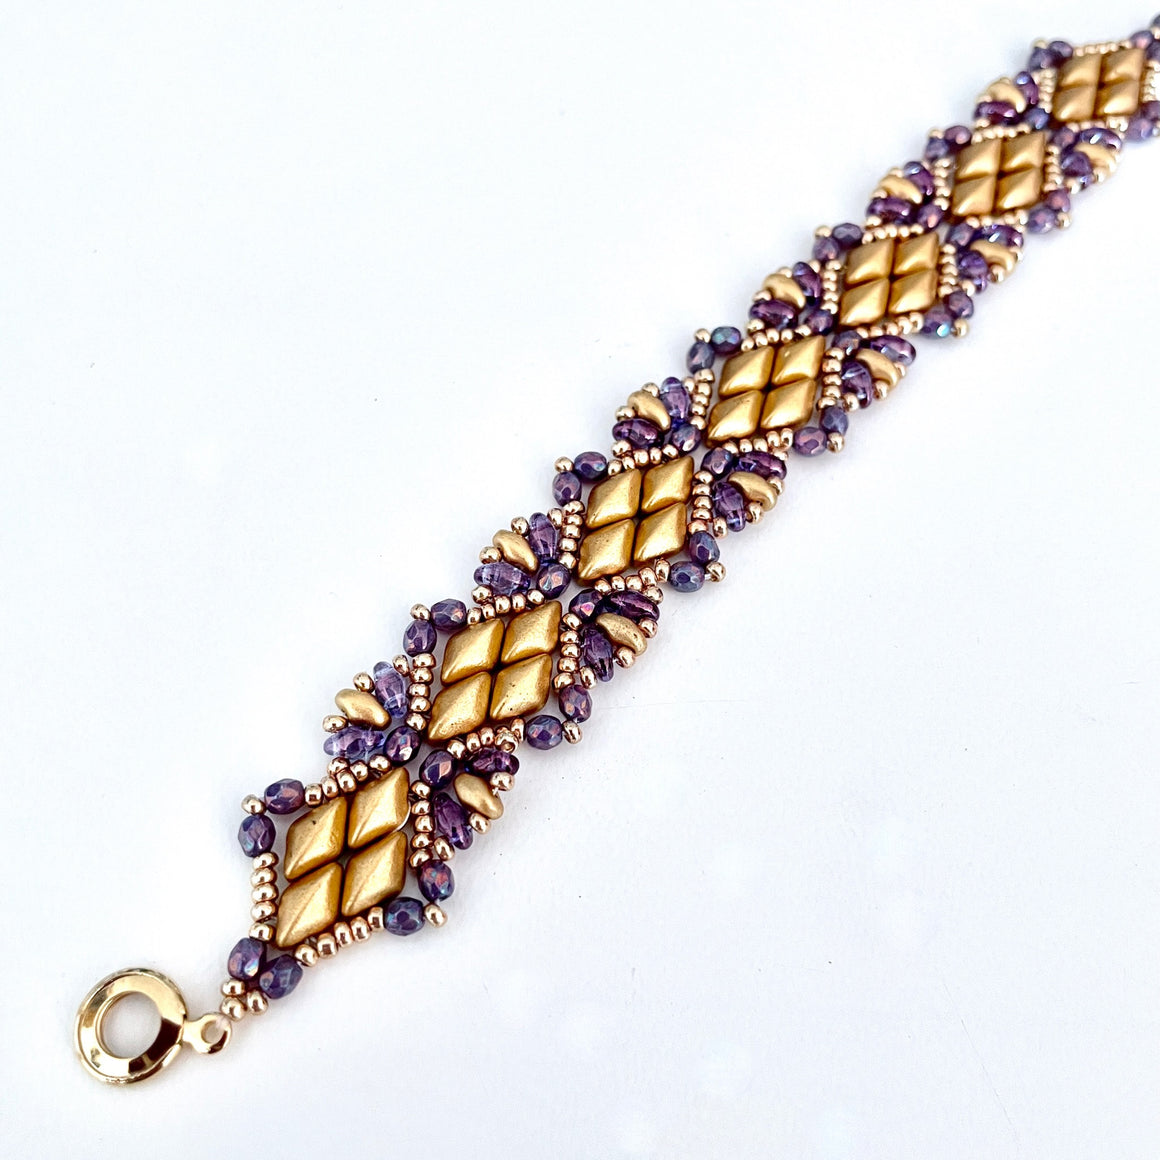 Solitaire Bracelet Class - Embellished Version